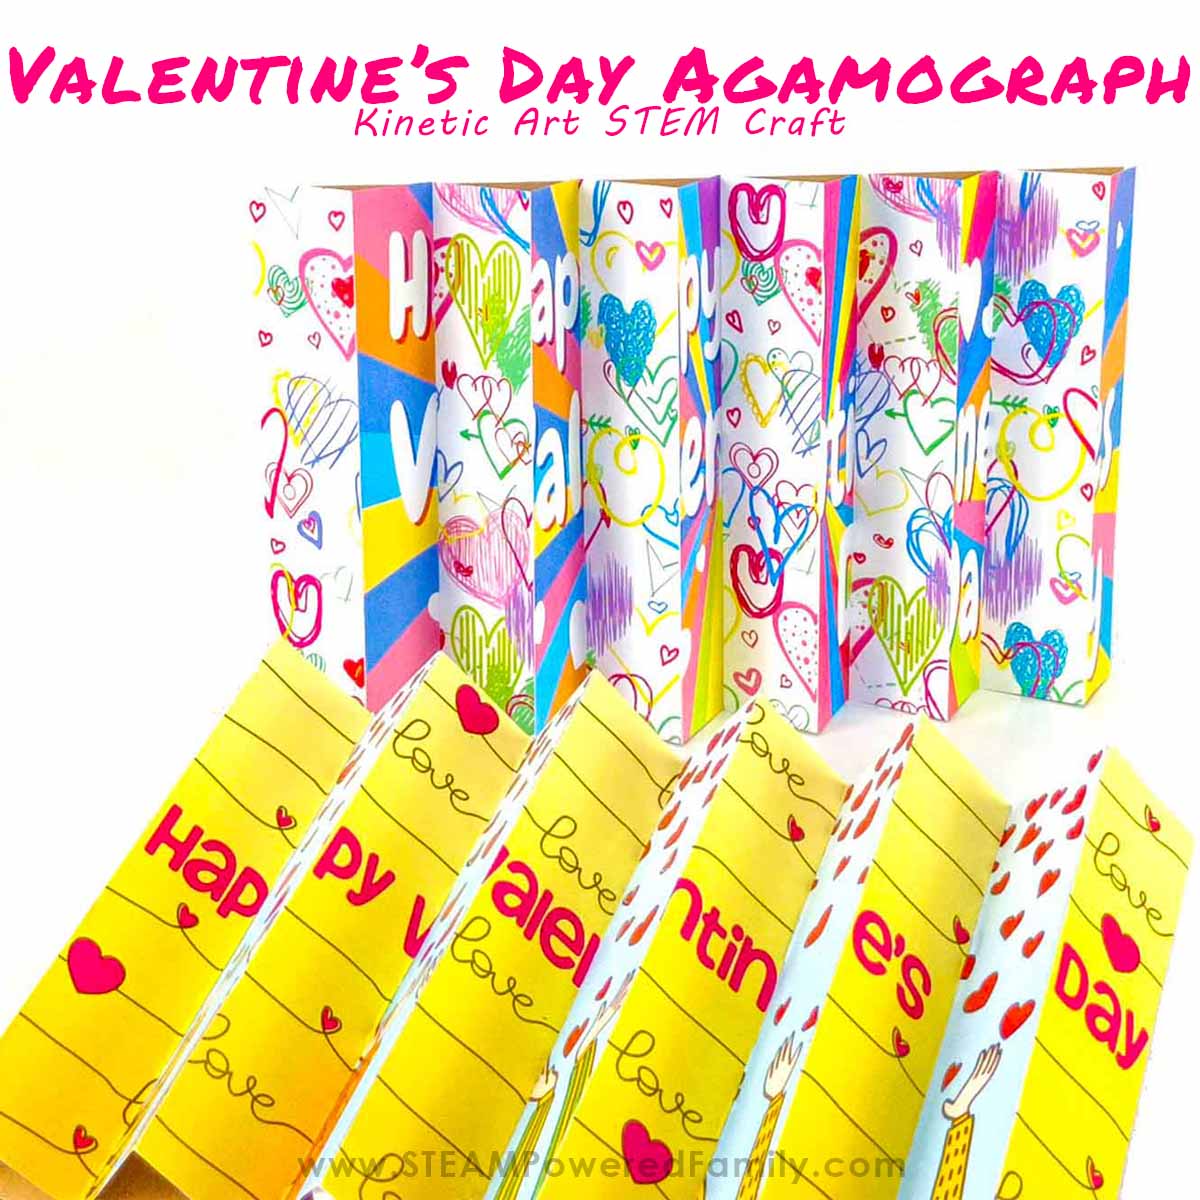 Valentine’s Day Agamograph STEM Craft